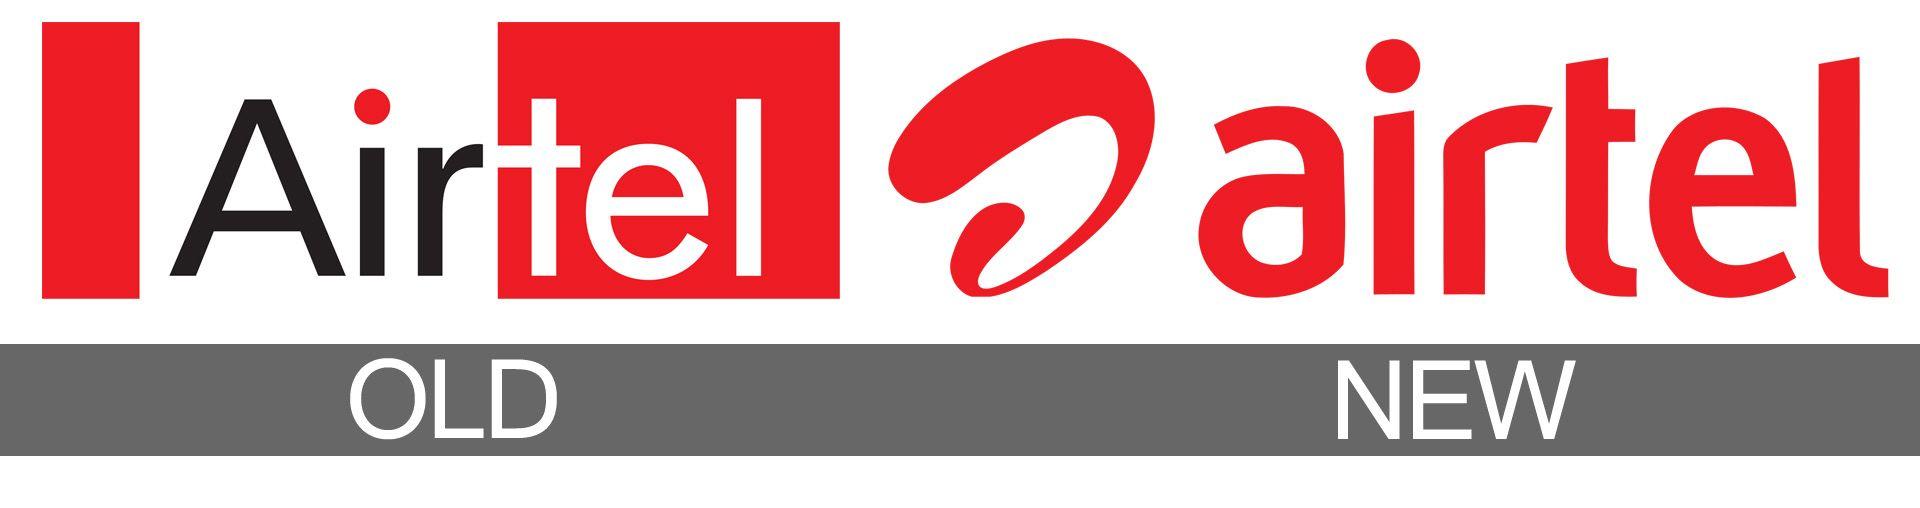 Bharti Airtel Logo - Airtel Logo, Airtel Symbol, Meaning, History and Evolution